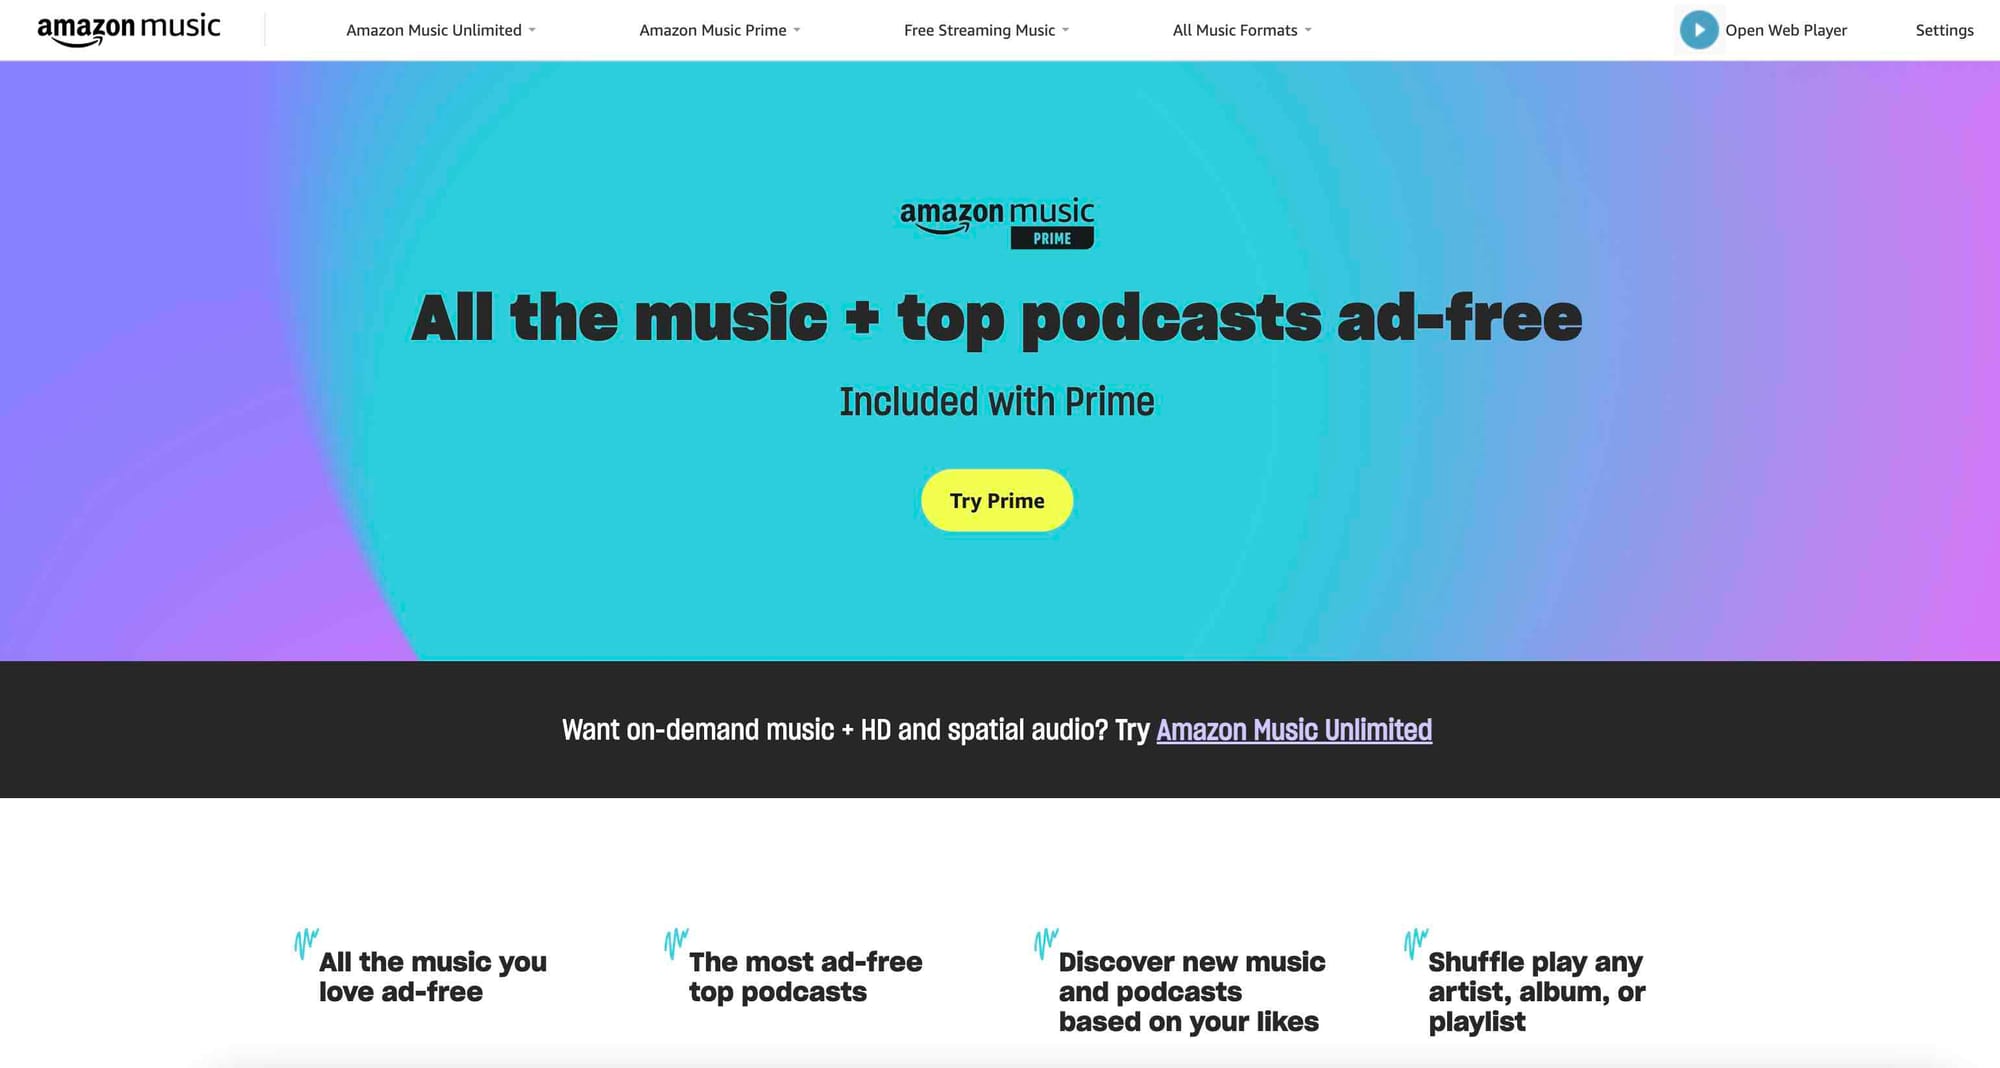 Amazon Music's homepage